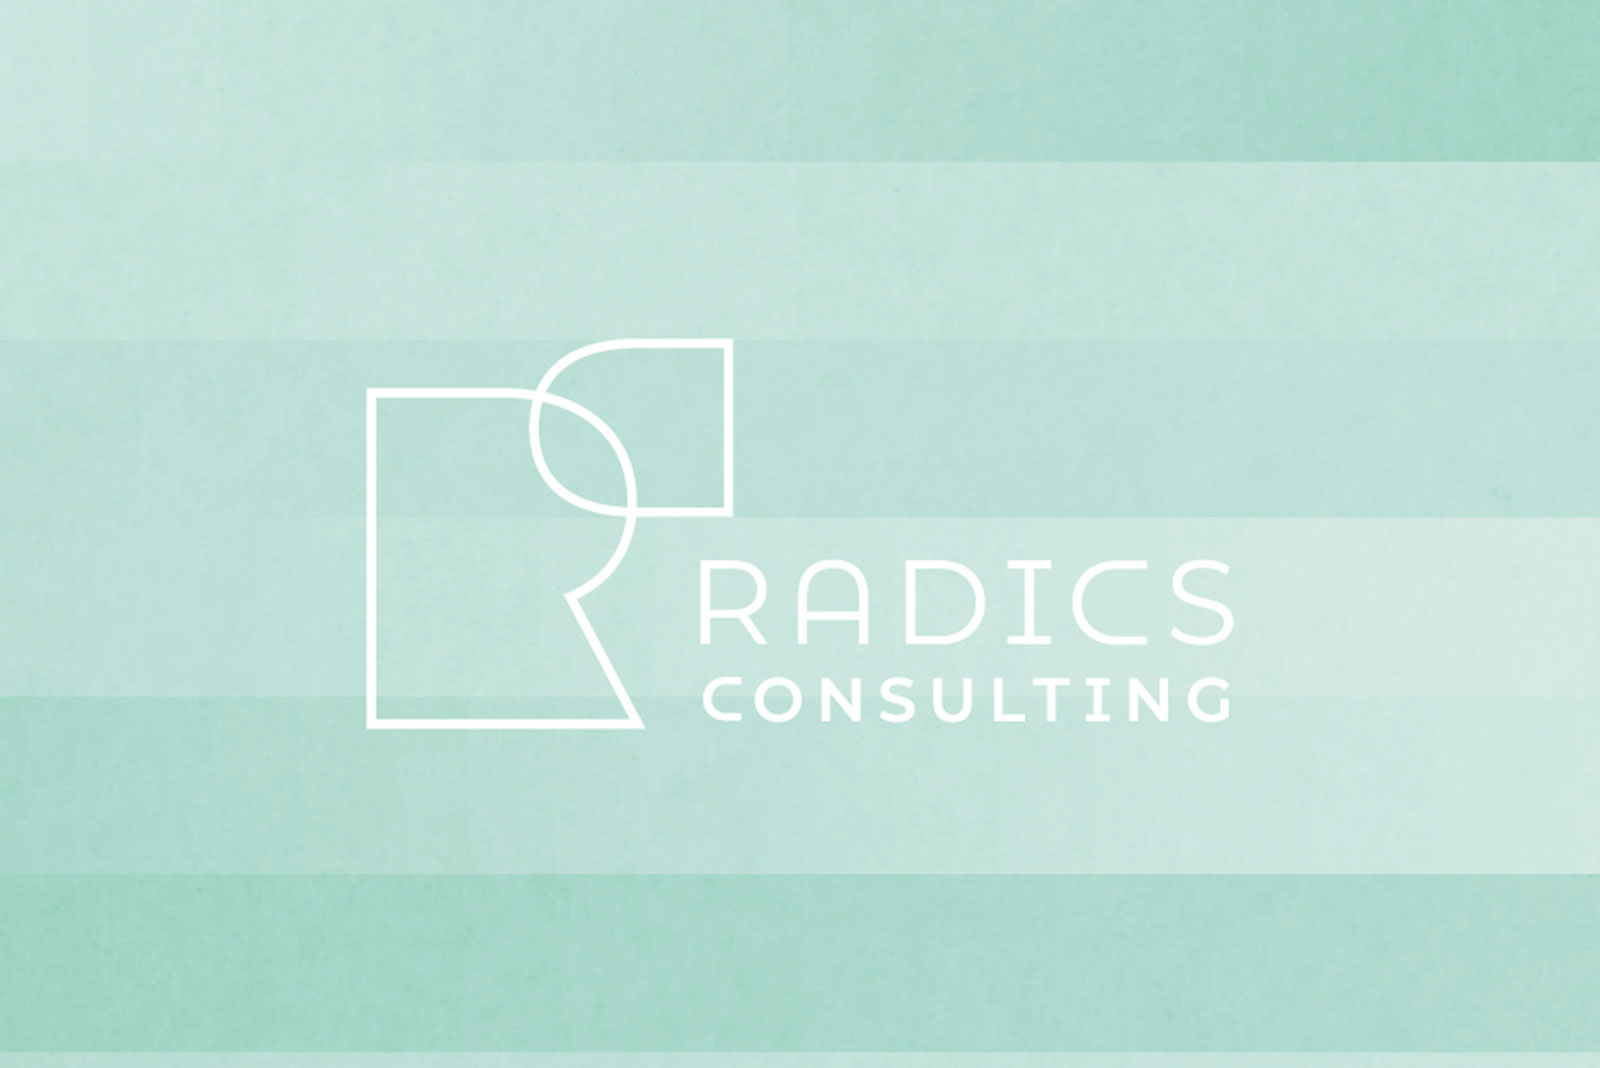 radios consulting business logo